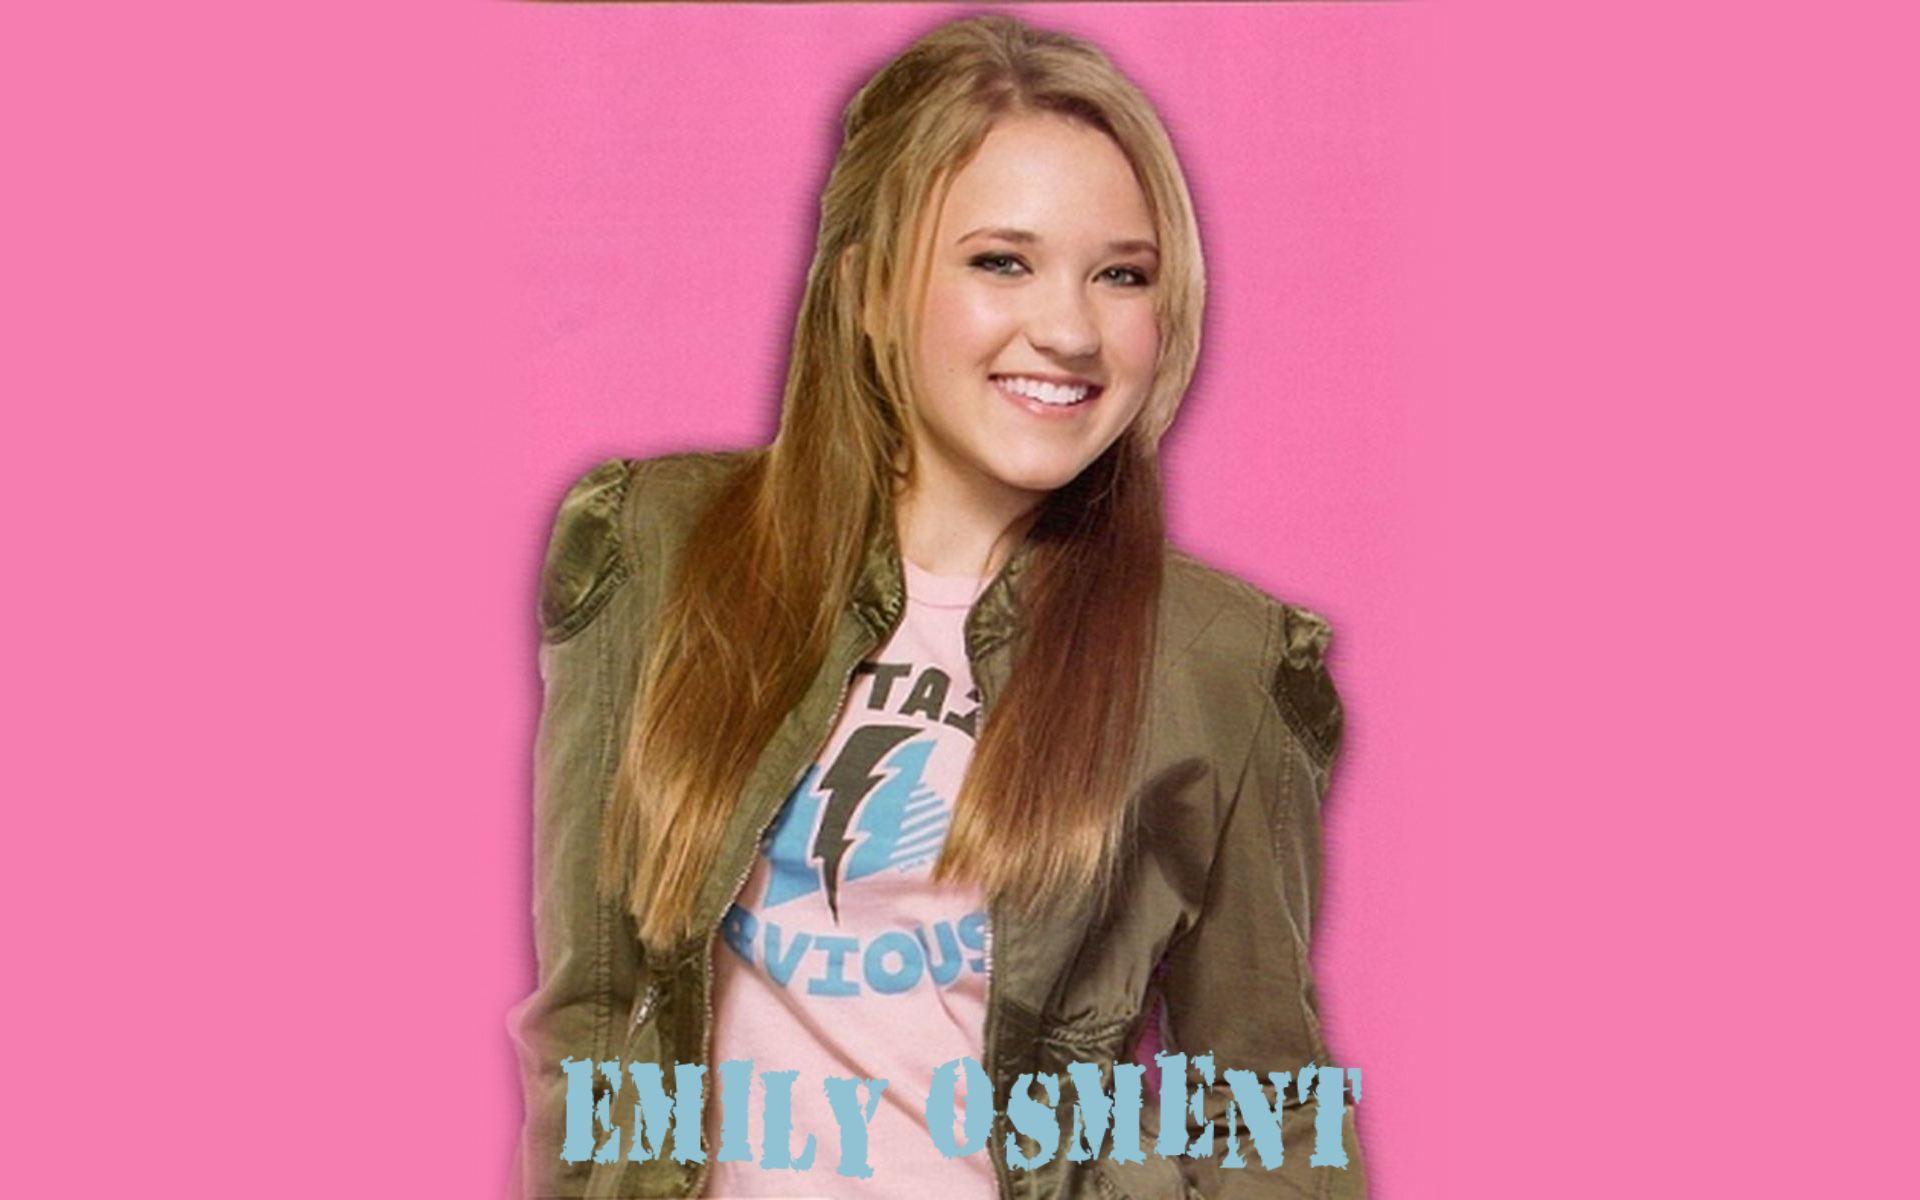 Emily Osment HD image. Emily Osment wallpaper